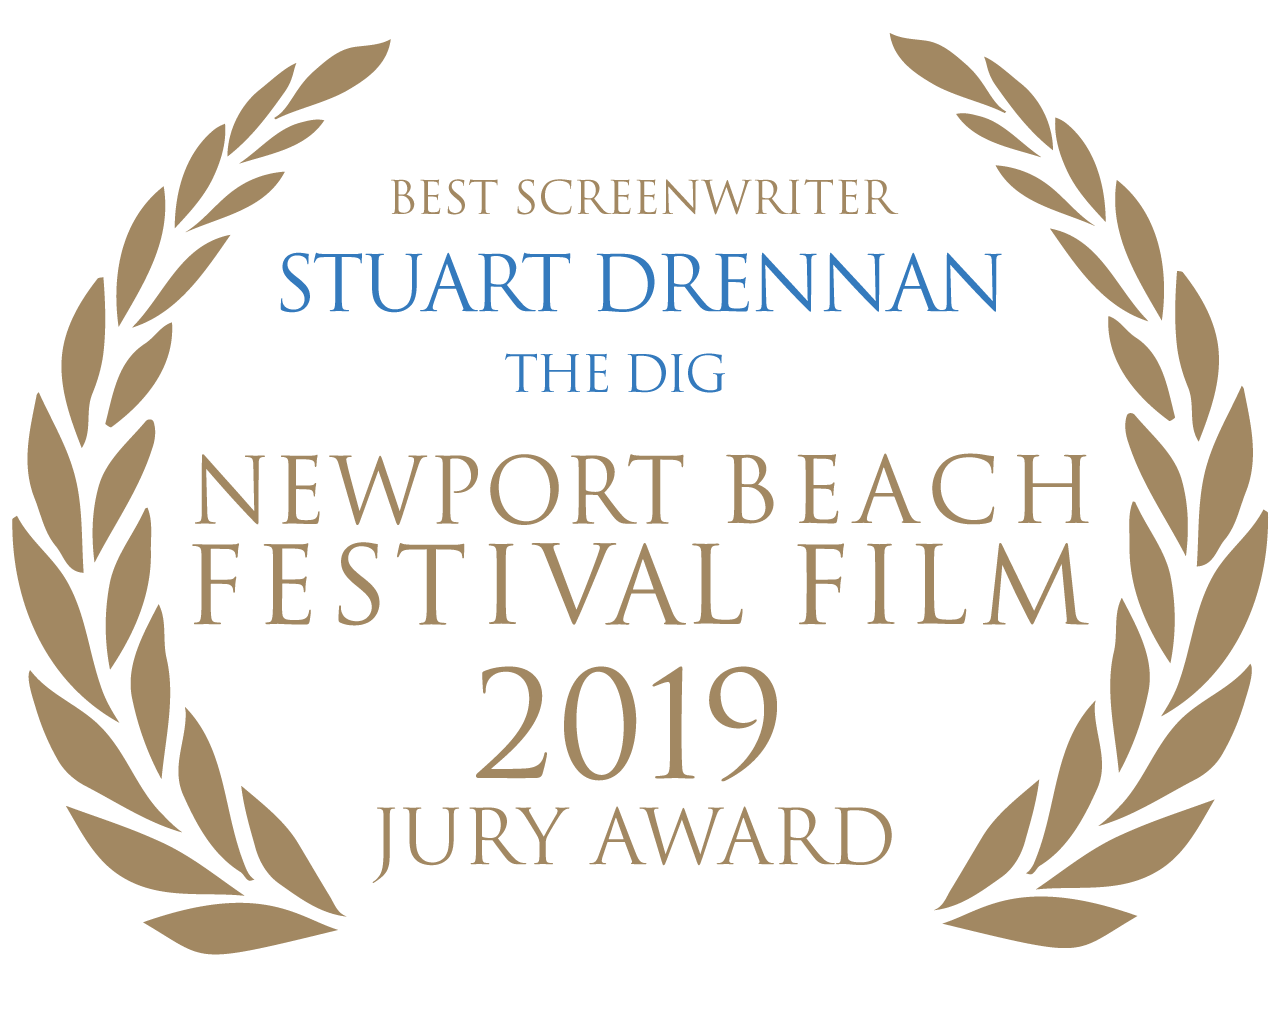 Best-Screenwriter-Stuart-Drennan-The-Dig